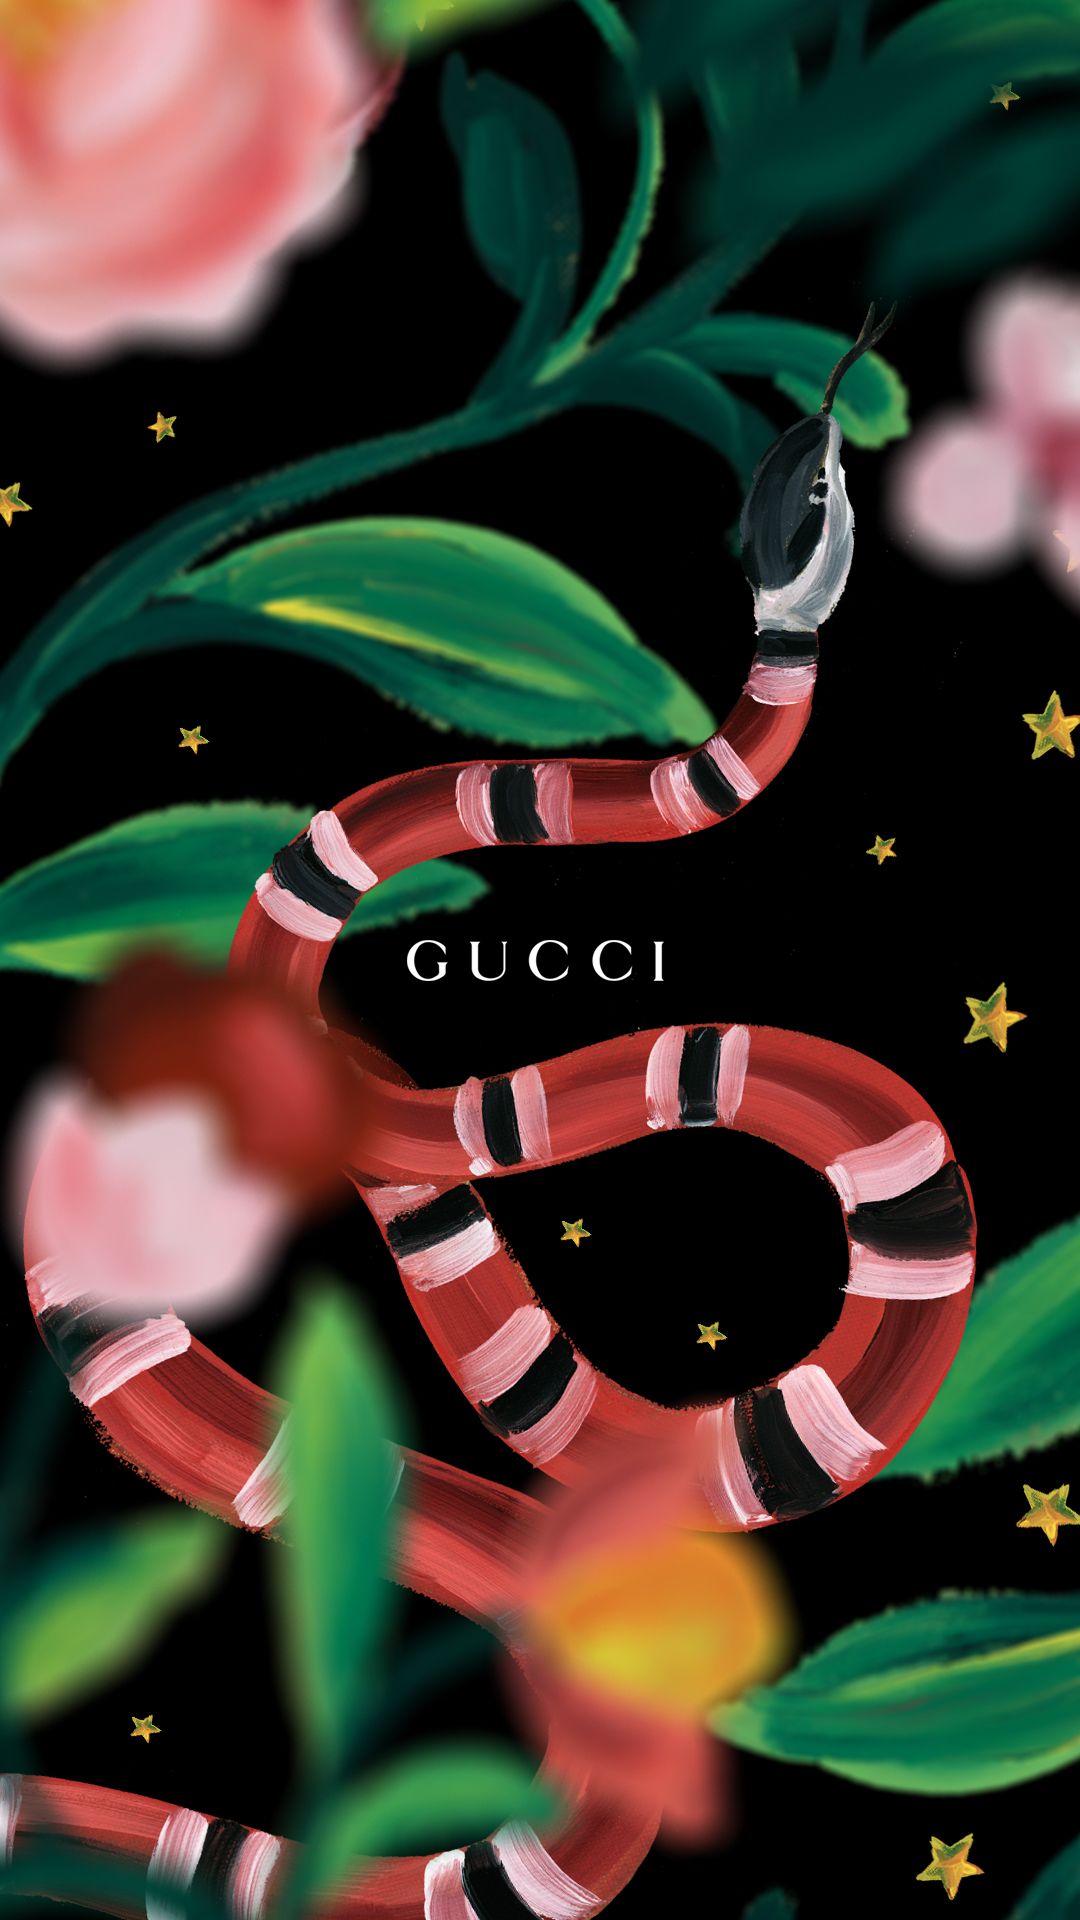 48+] Gucci iPhone Wallpaper Supreme on WallpaperSafari  Supreme wallpaper, Supreme  iphone wallpaper, Supreme wallpaper hd